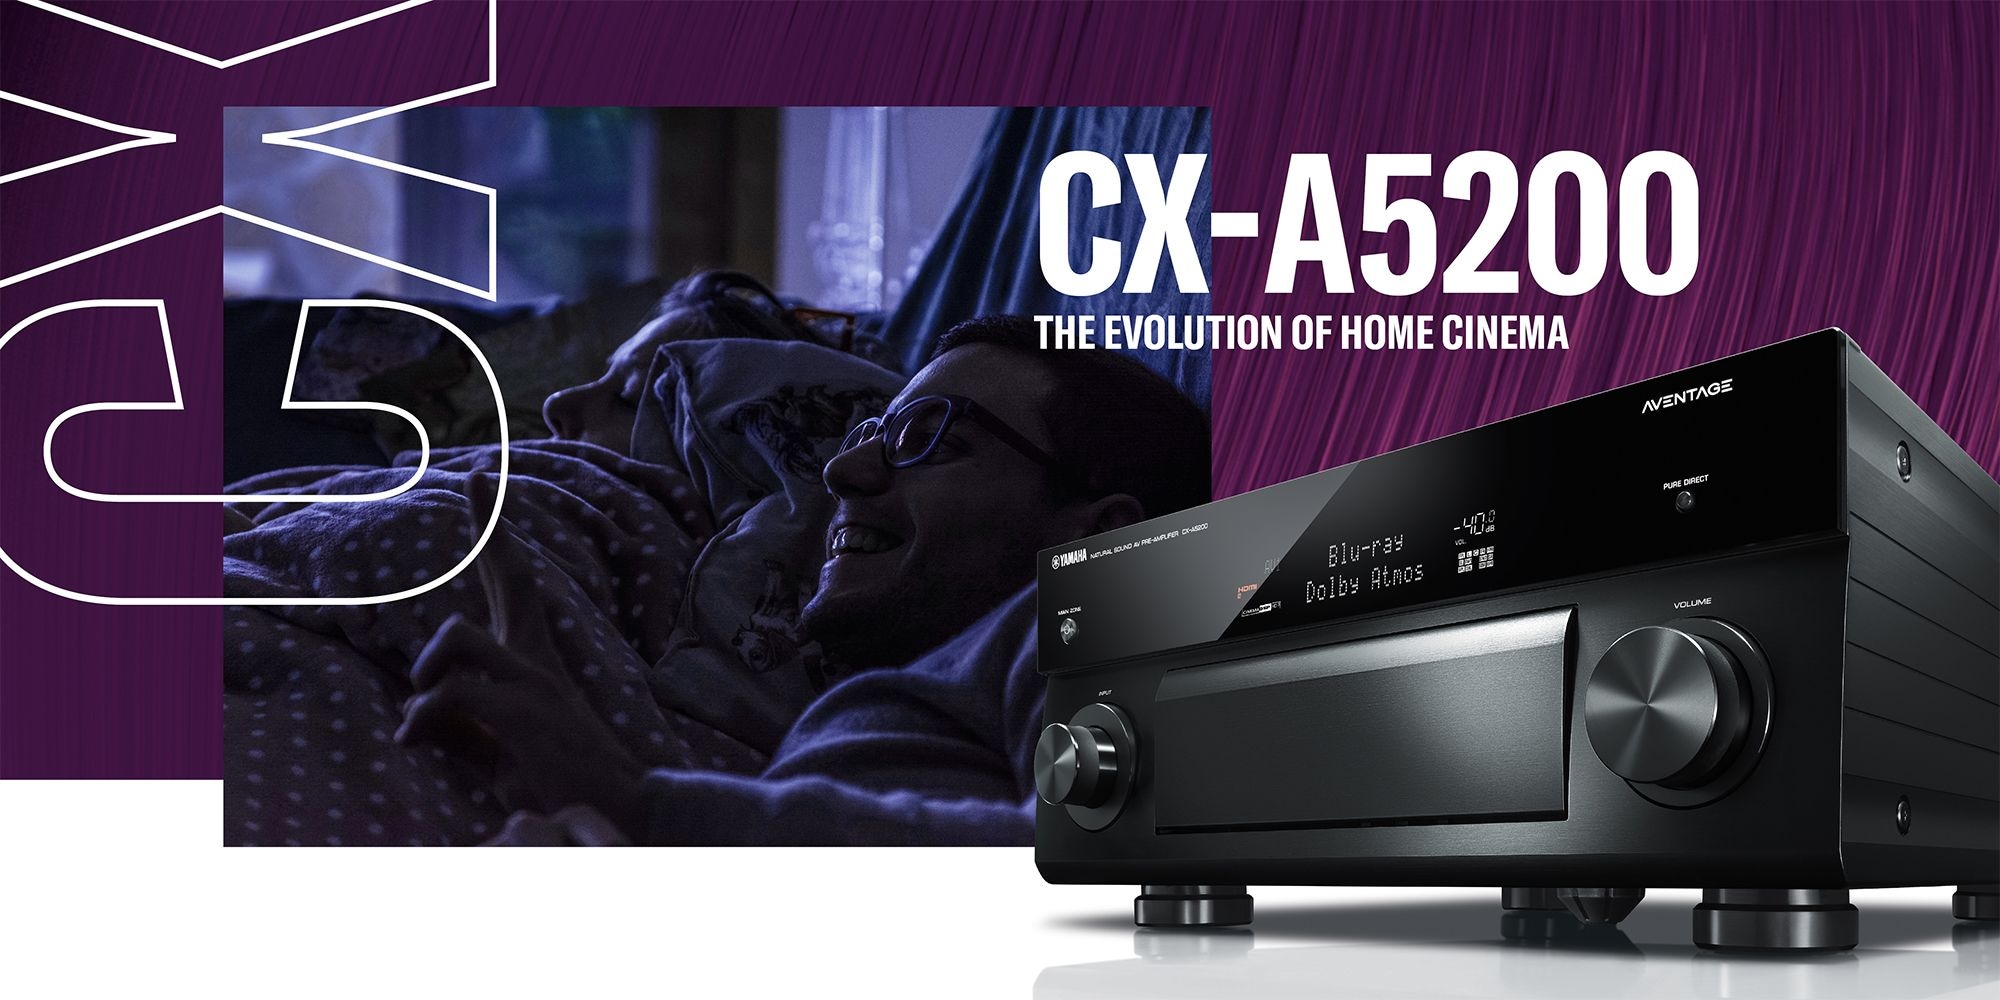 CX-A5200 The Evolution of Home Cinema